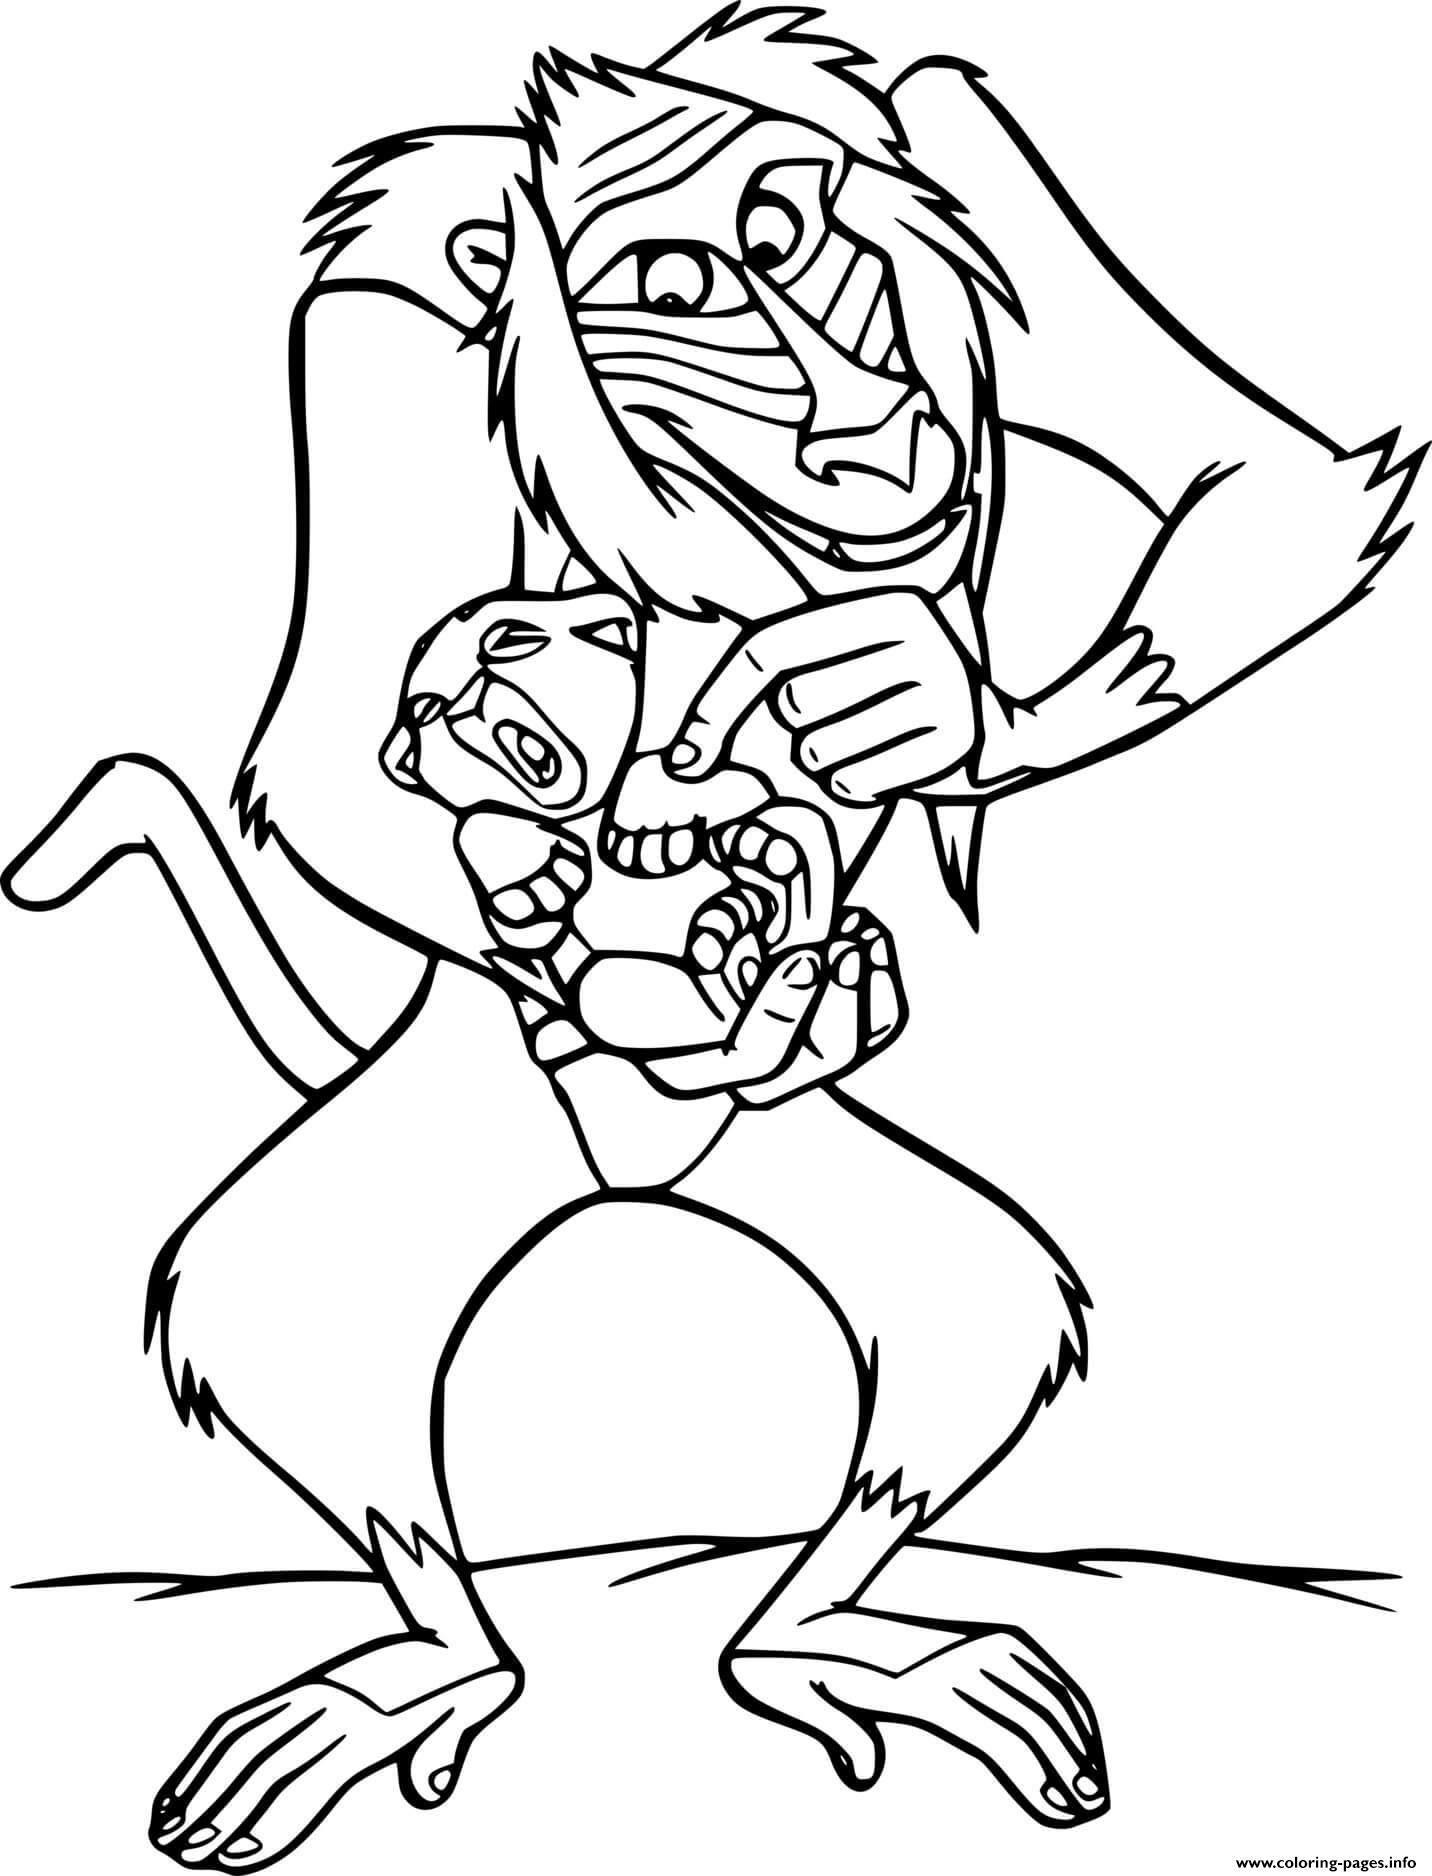 Rafiki Playing With Baby Simba coloring